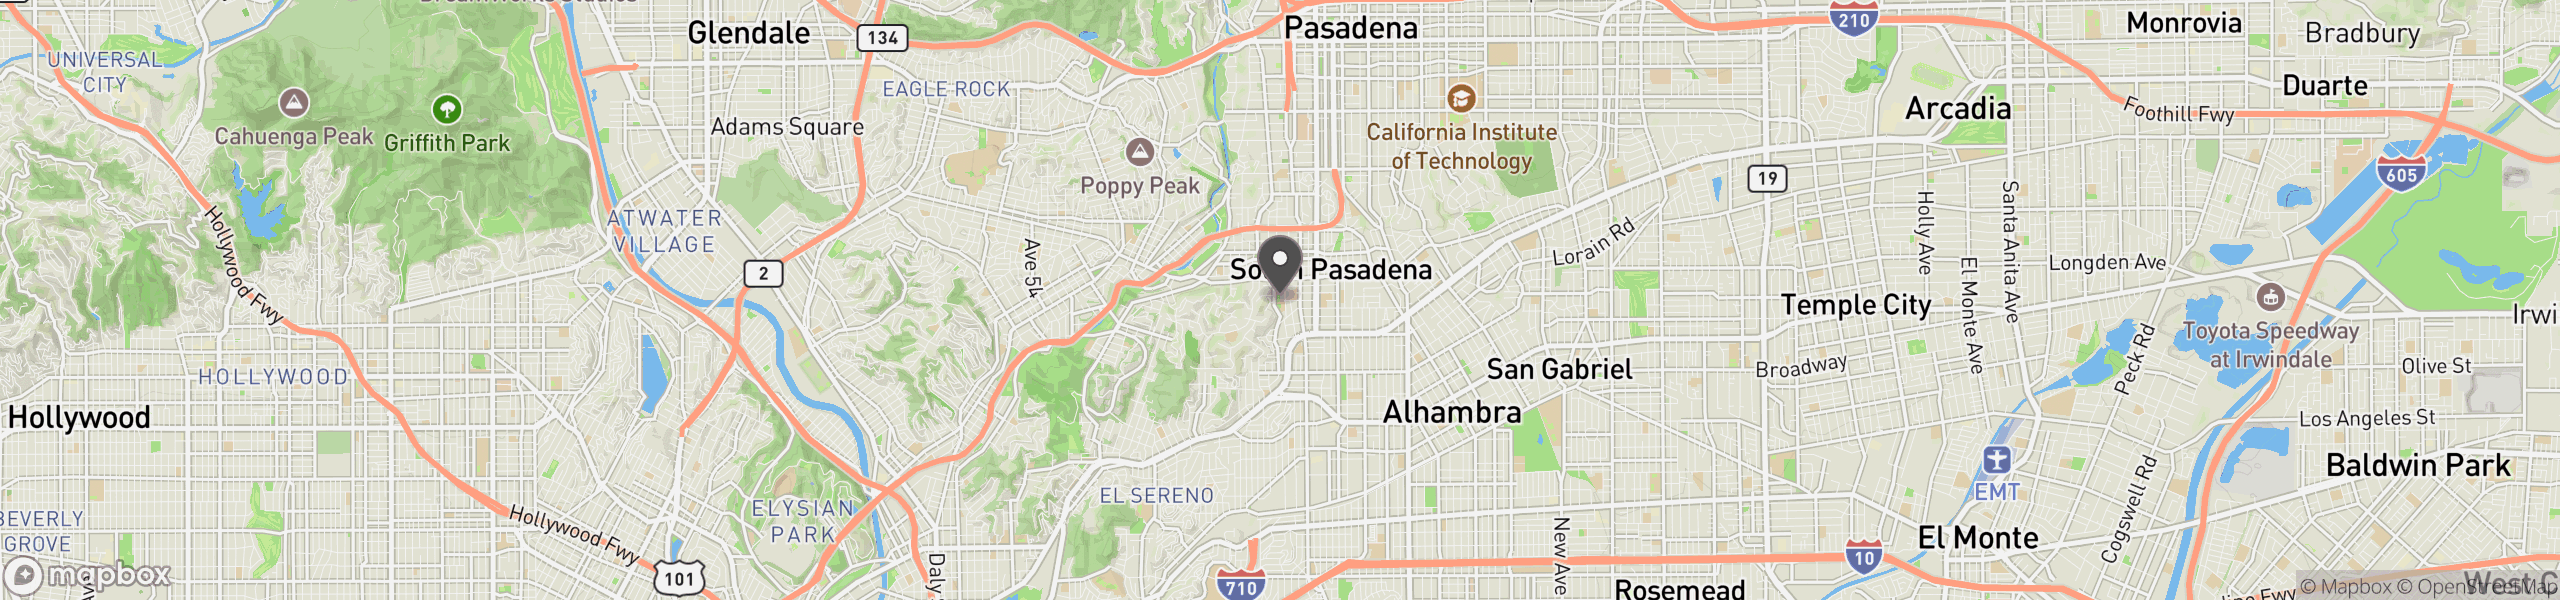 South Pasadena, CA